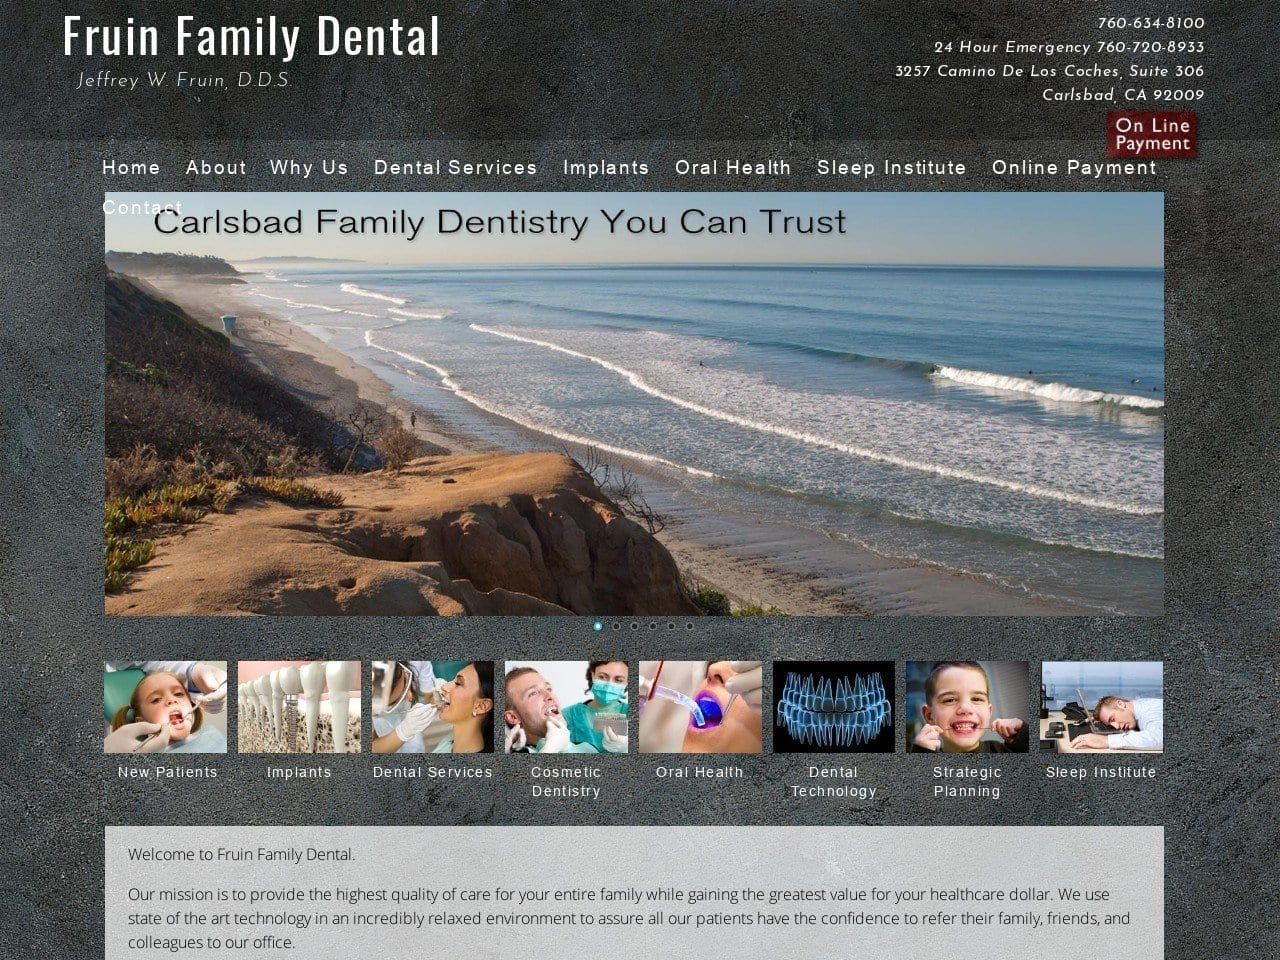 Fruin Family Dental Website Screenshot from drfruin.com